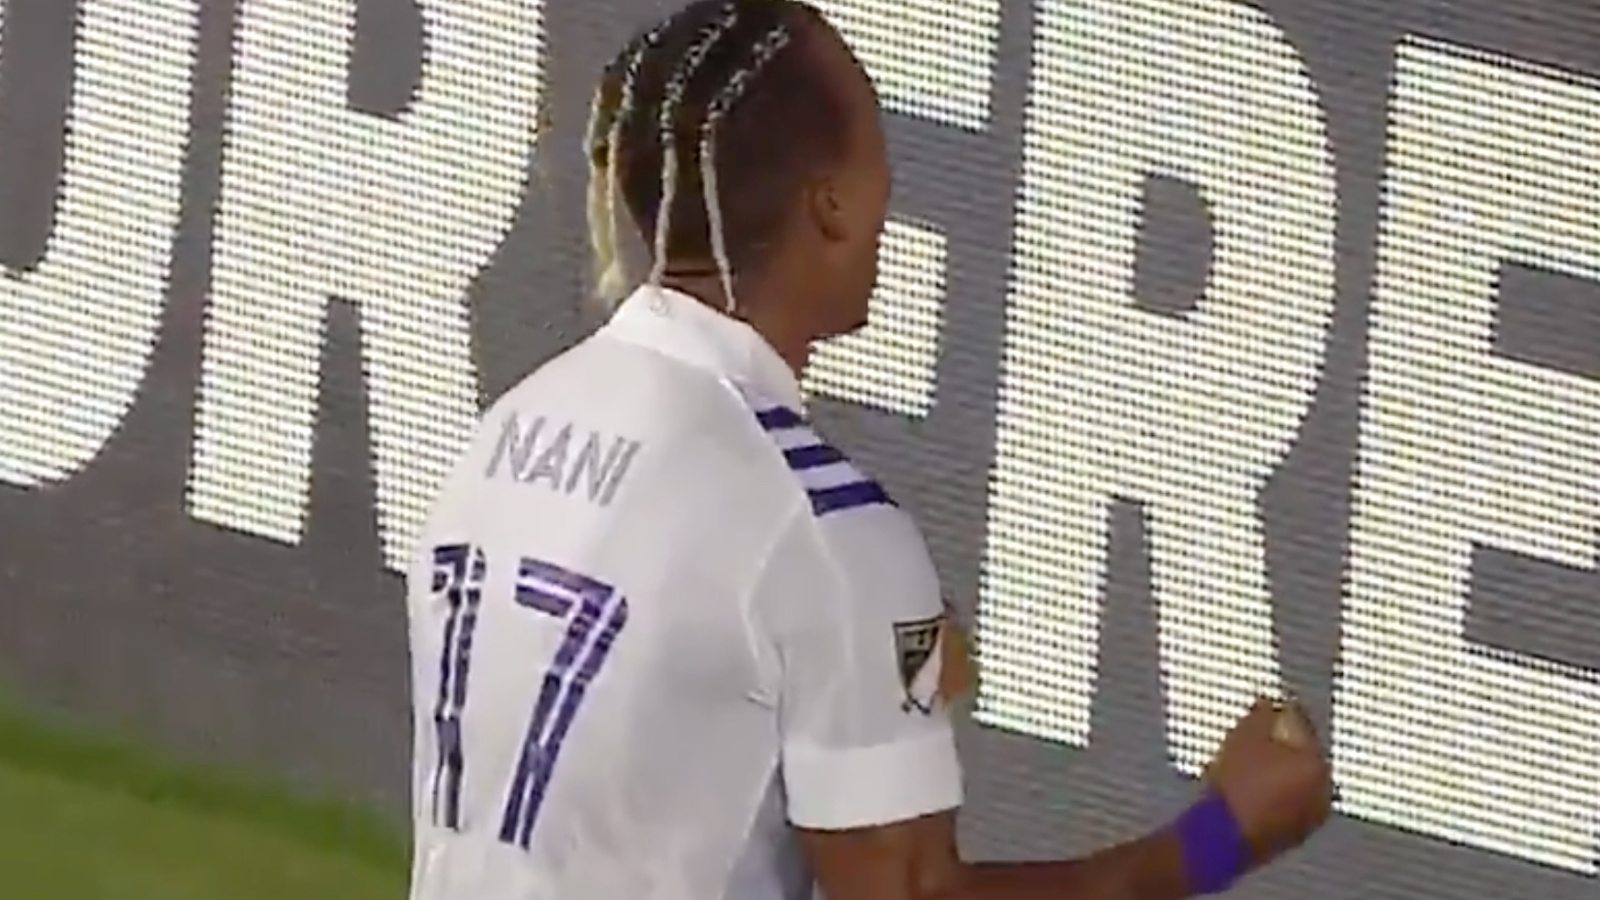 Nani celebrates scoring a match winning goal against Inter Miami